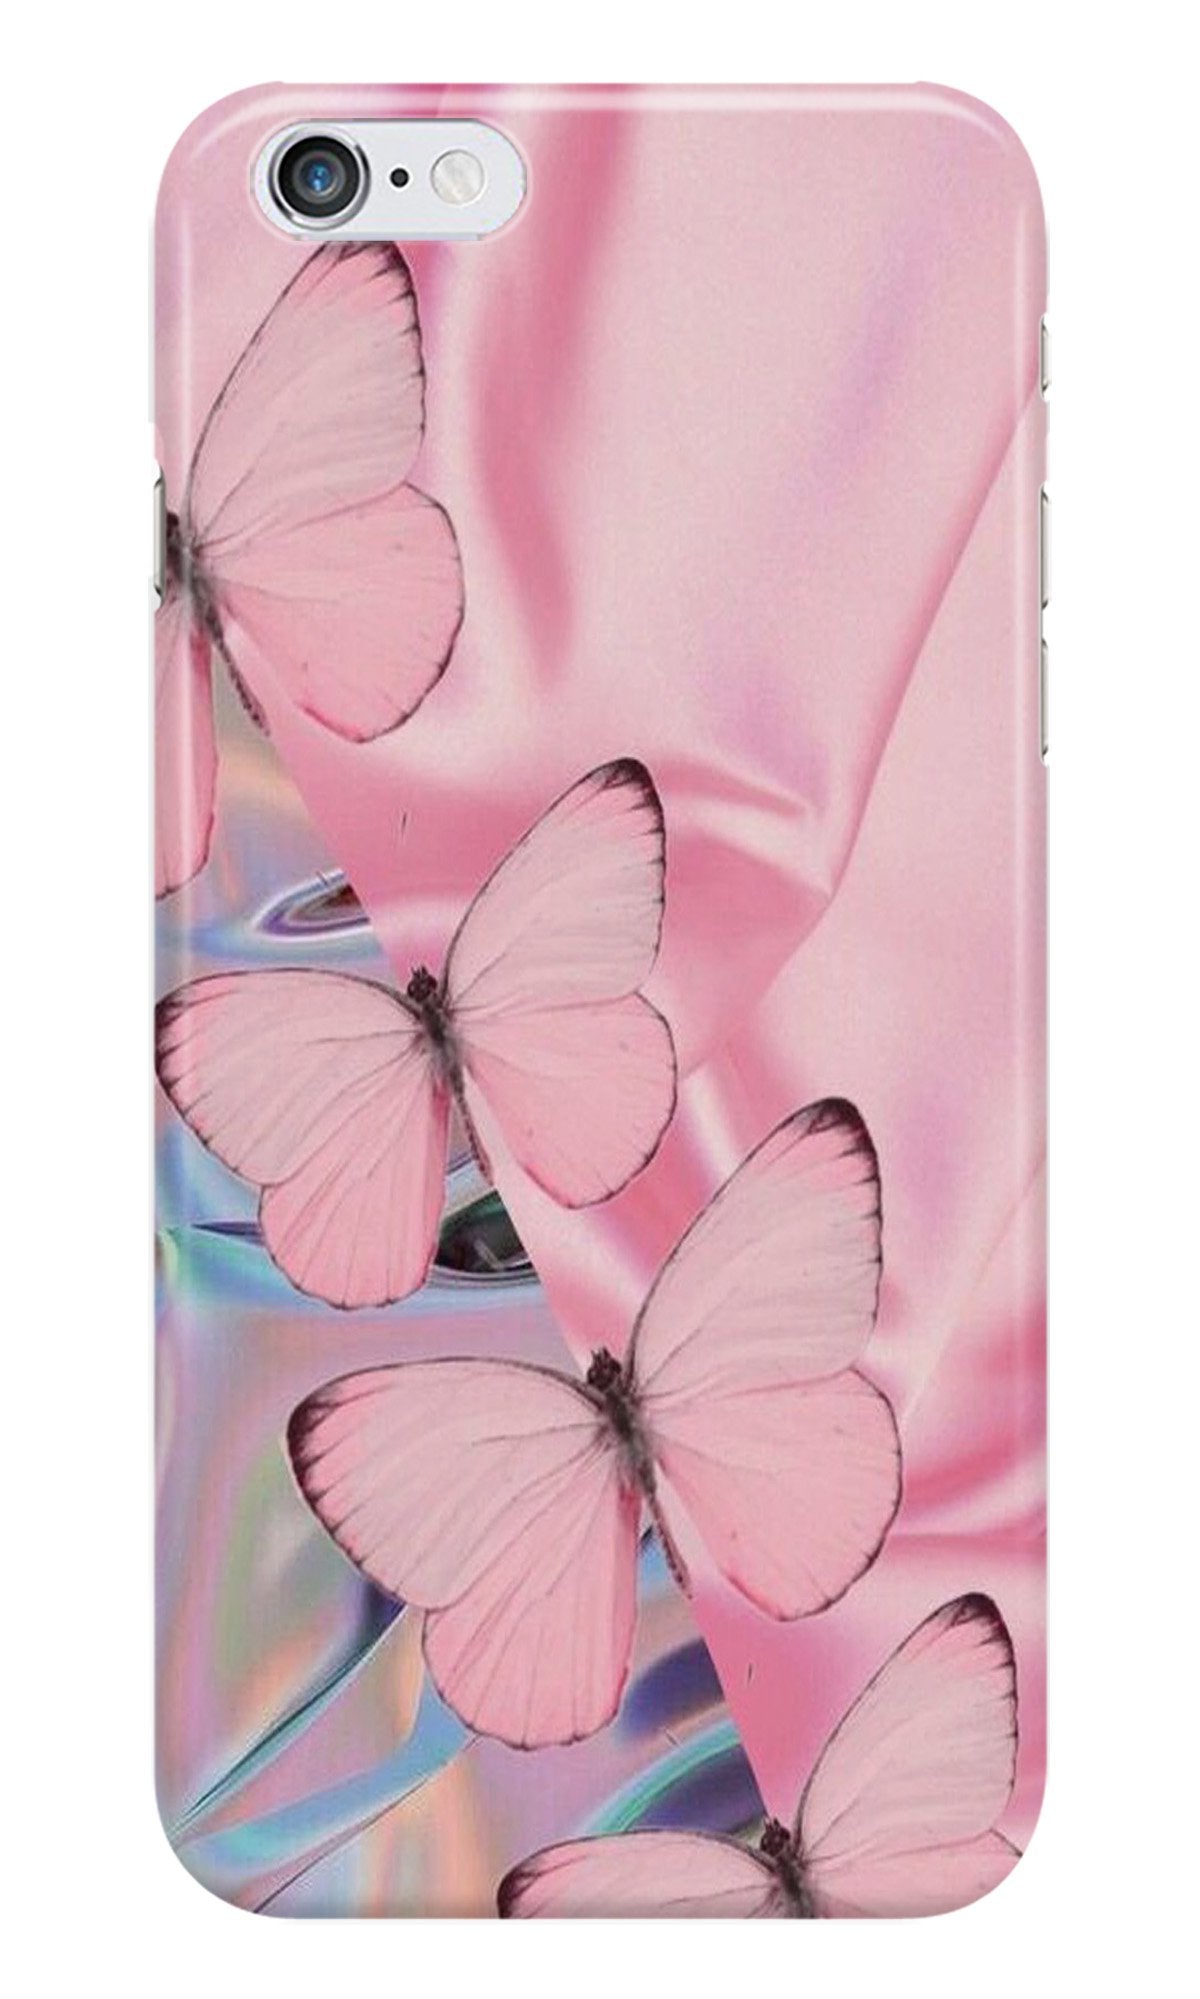 Butterflies Case for iPhone 6 Plus/ 6s Plus